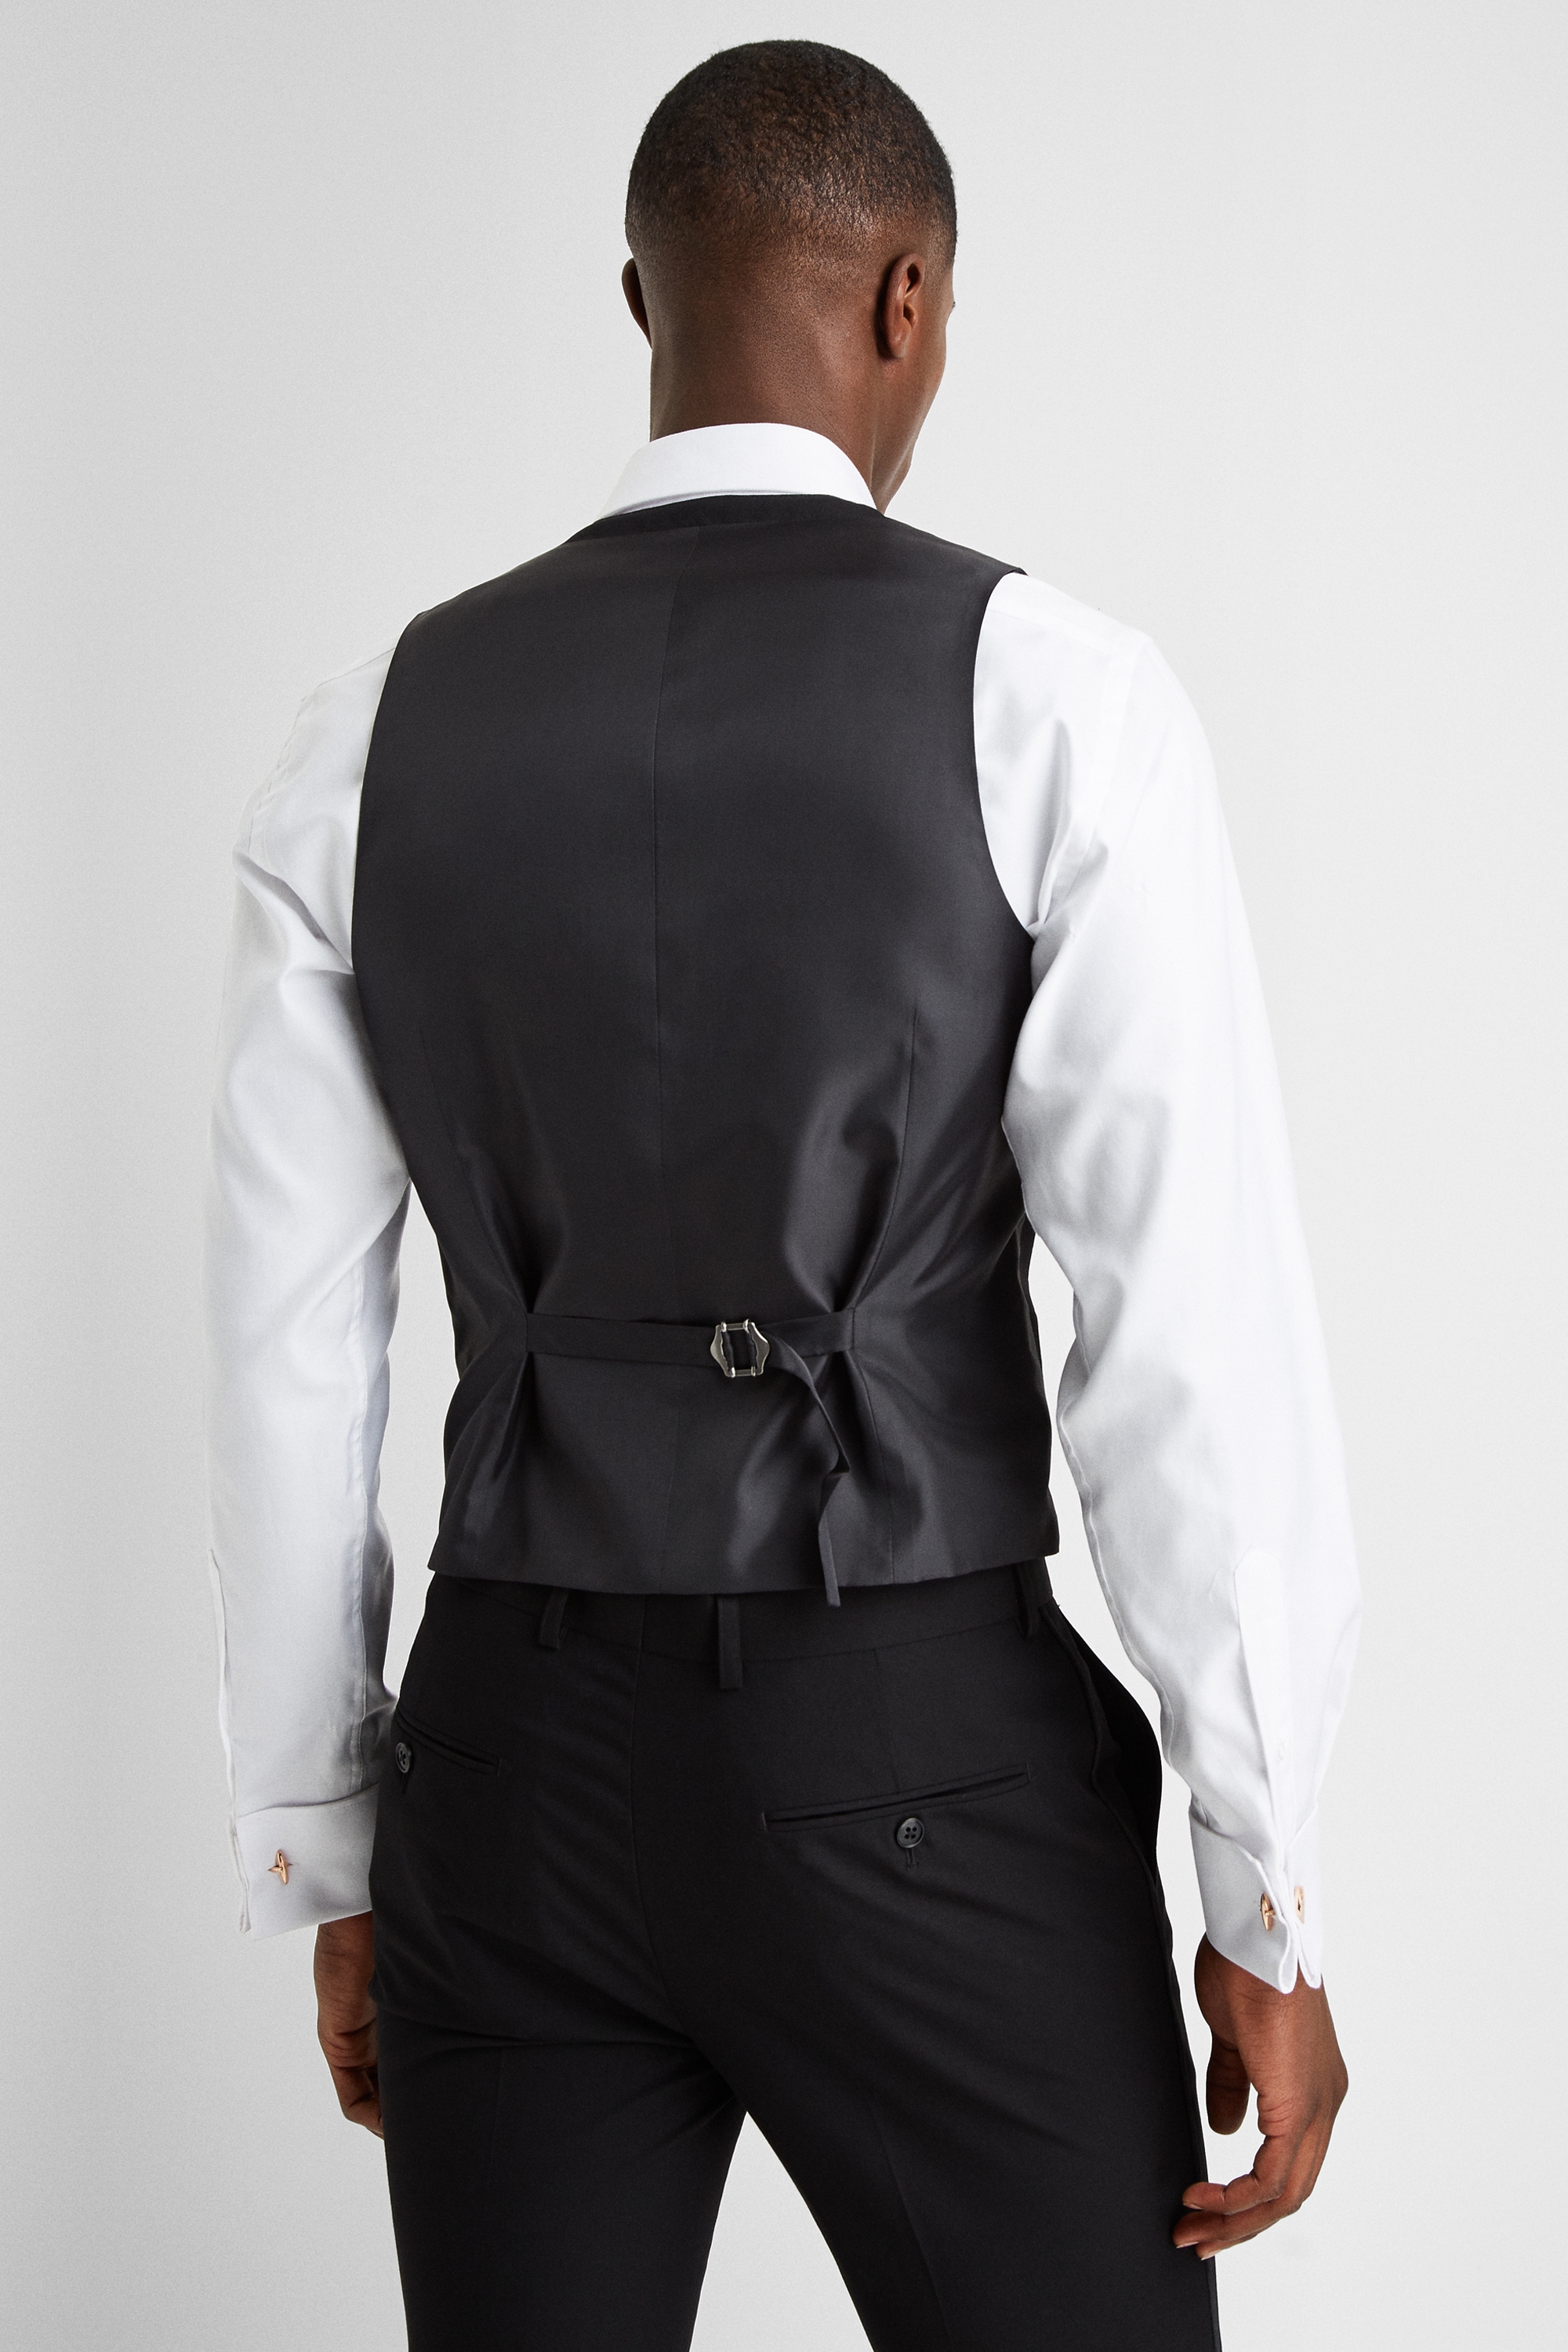 Slim Fit Black Dress Waistcoat | Buy Online at Moss